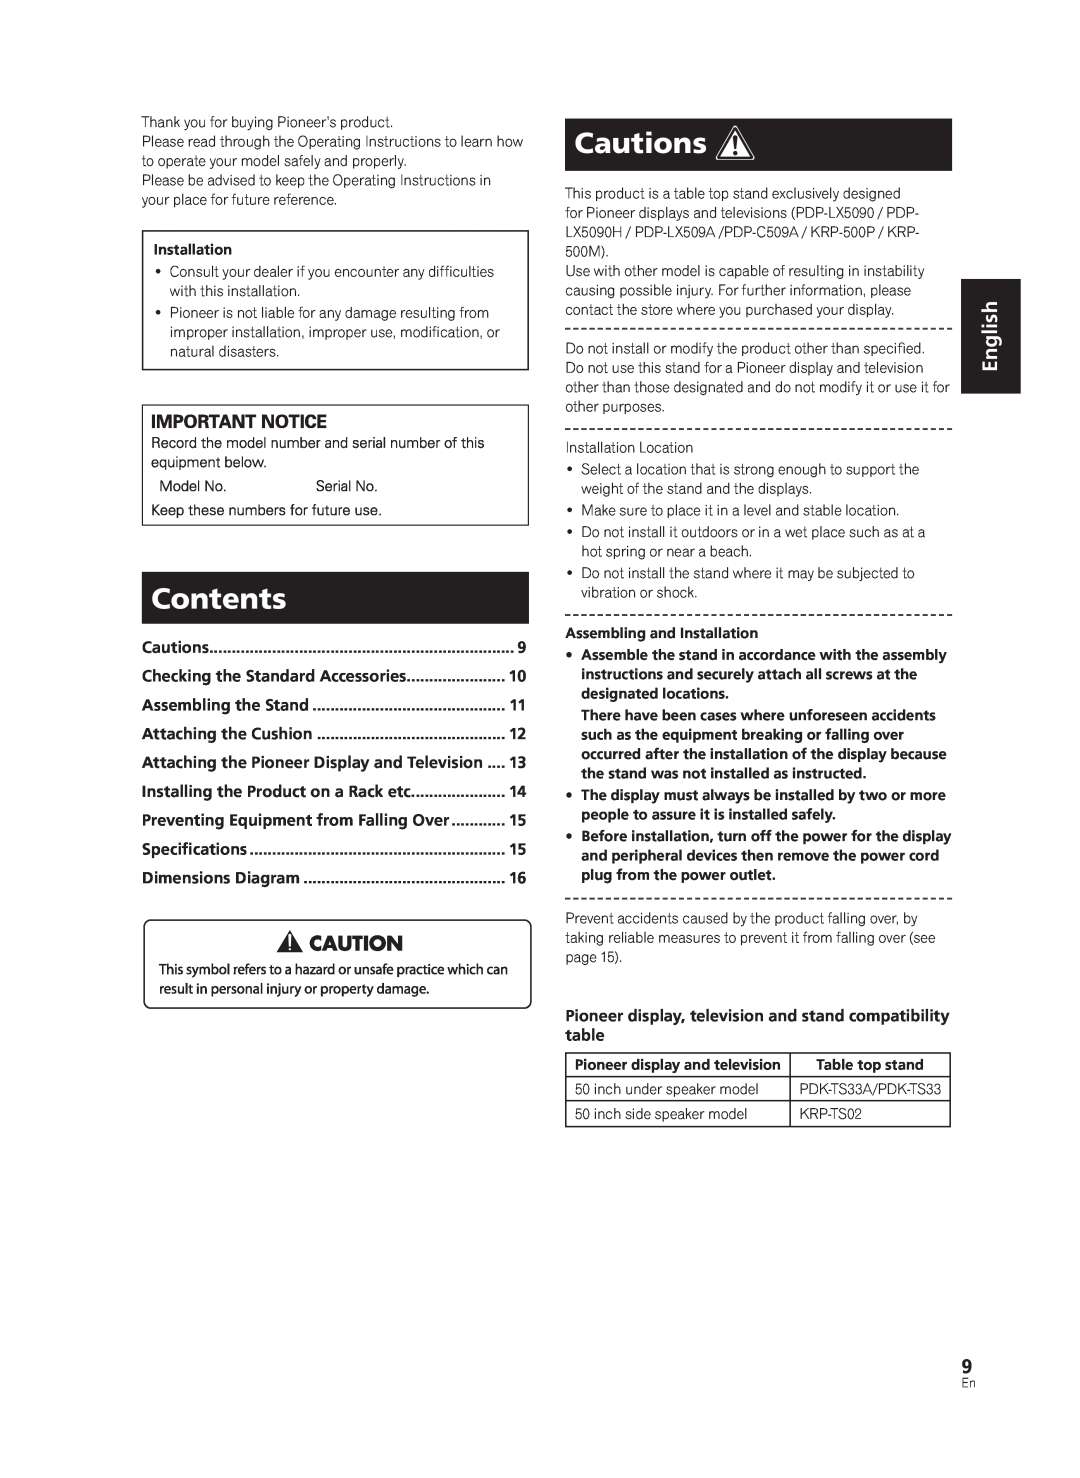 Pioneer PDK-TS33A, KRP-TS02 manual Contents, Cautions, English 